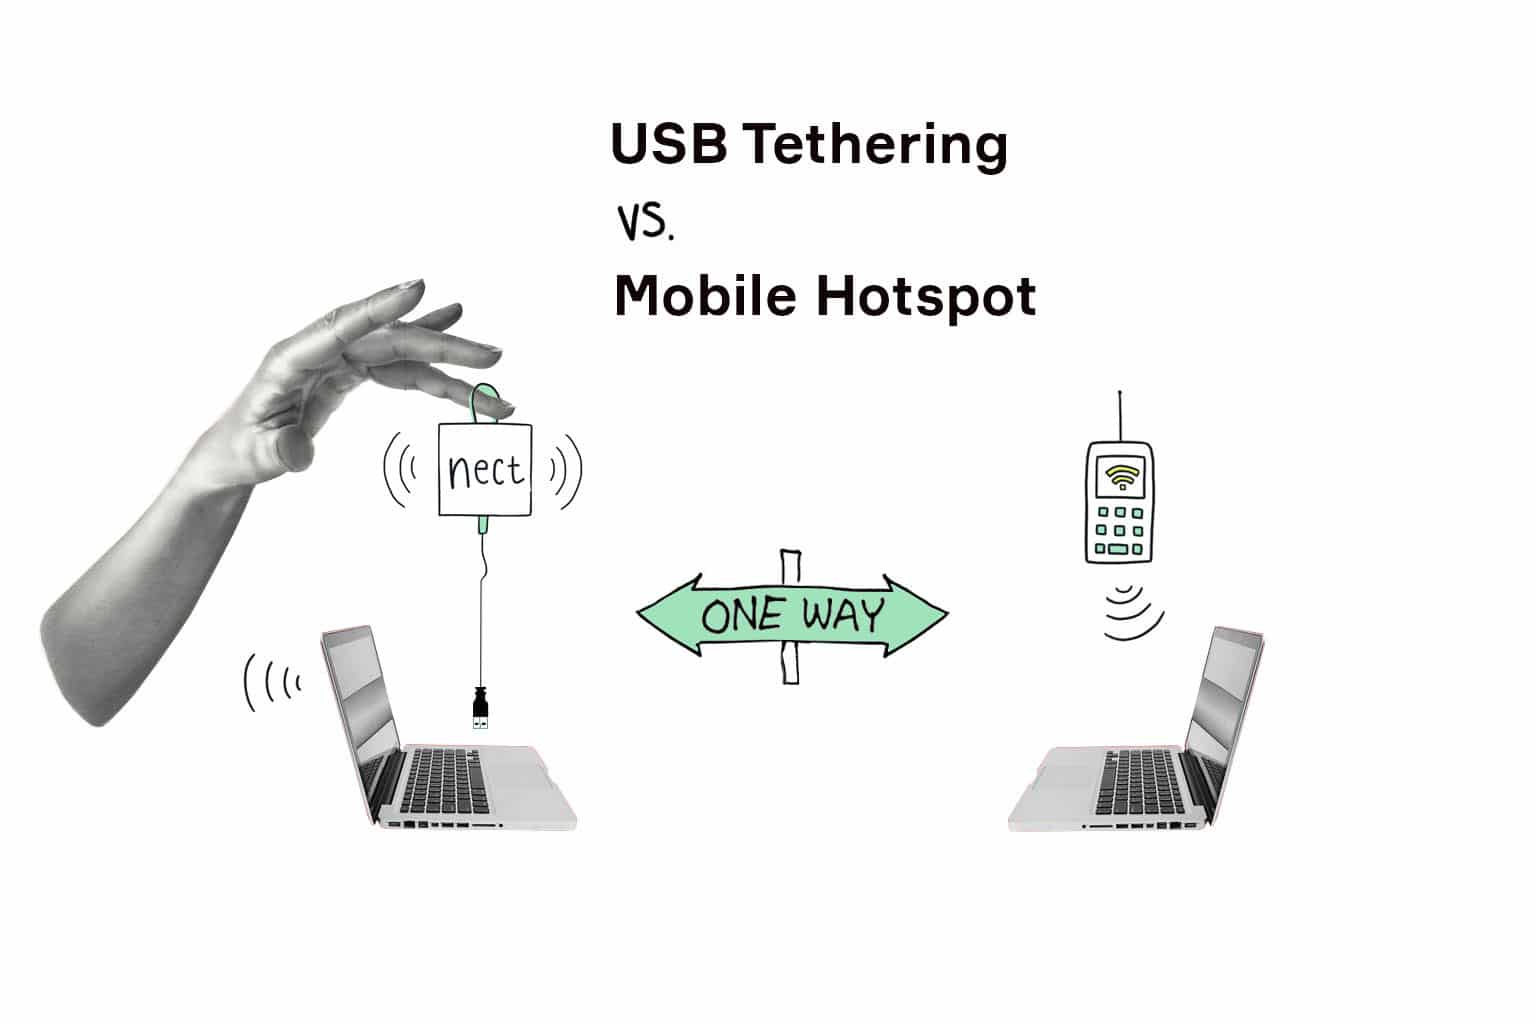 pueblo abeja Larry Belmont USB Tethering vs Mobile Hotspot: Which Is Better? | nect MODEM